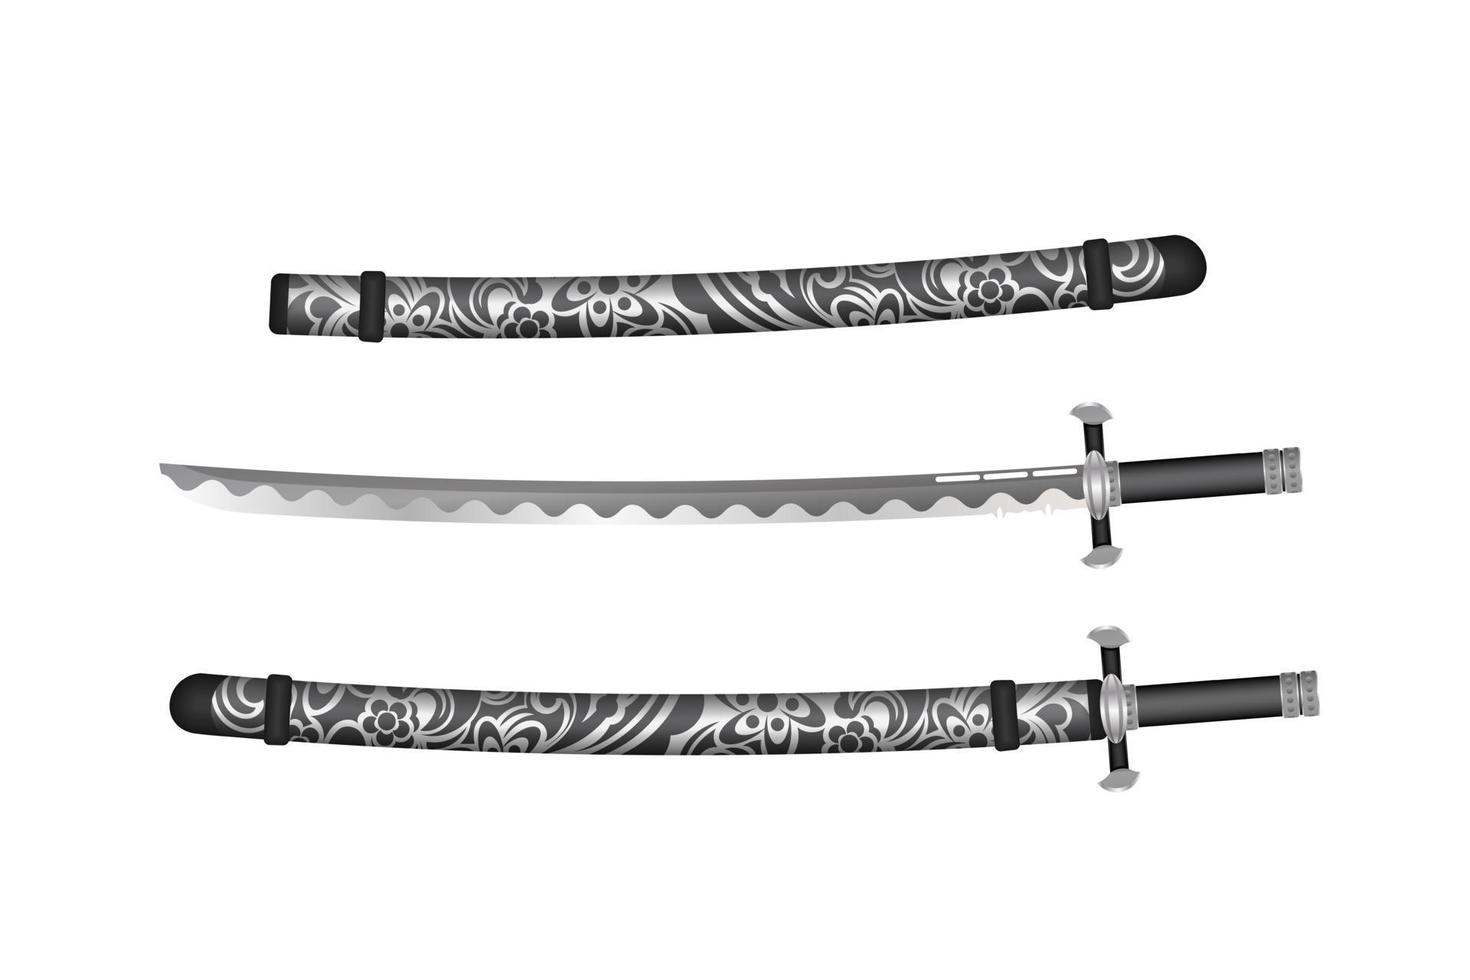 Katana Samurai sword in realistic style. Japanese sword. Vector illustration.